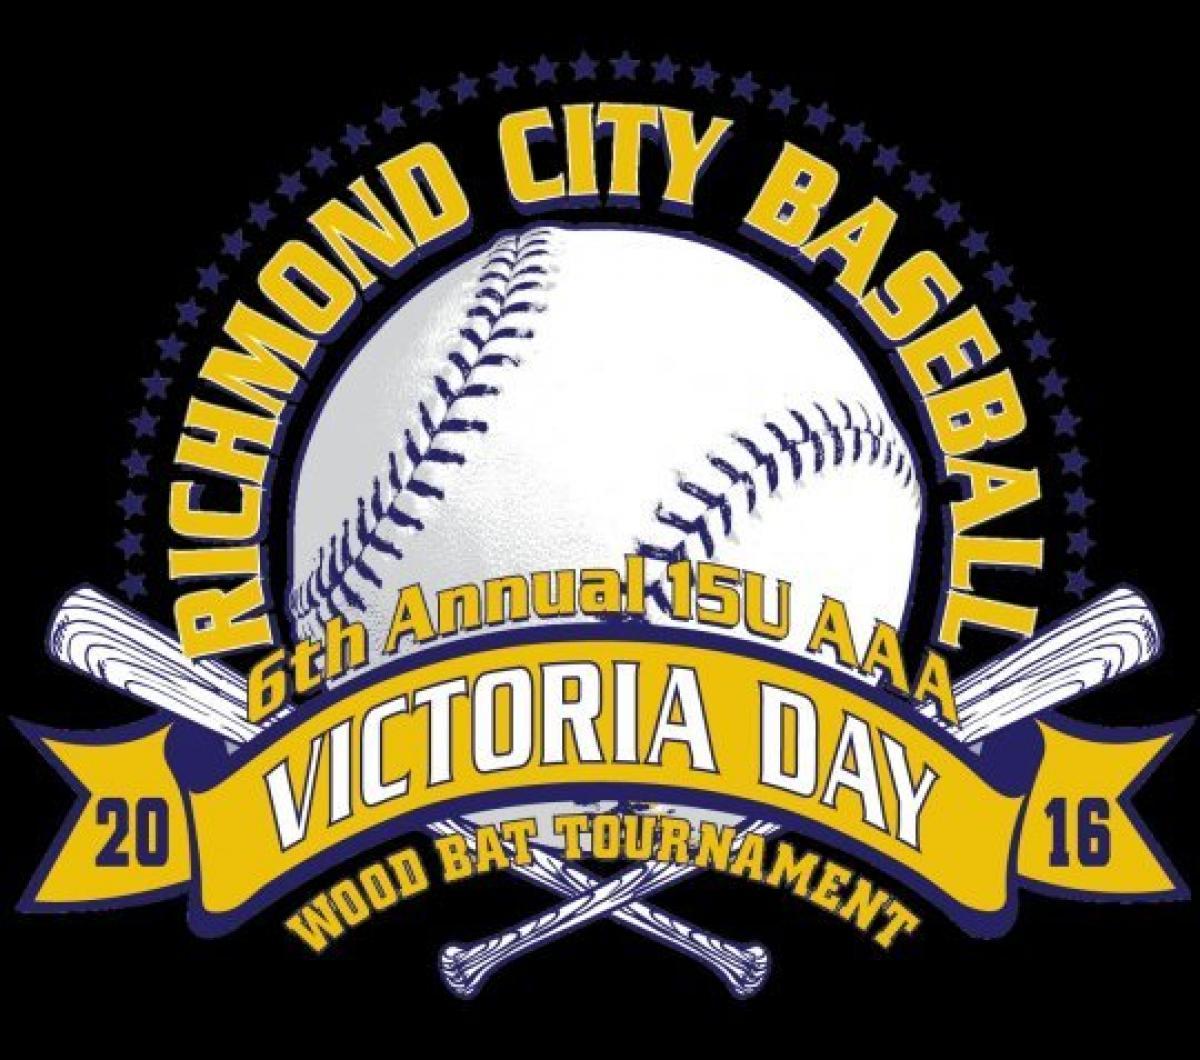 Richmond Queen Victoria Day Tournament Re-cap!